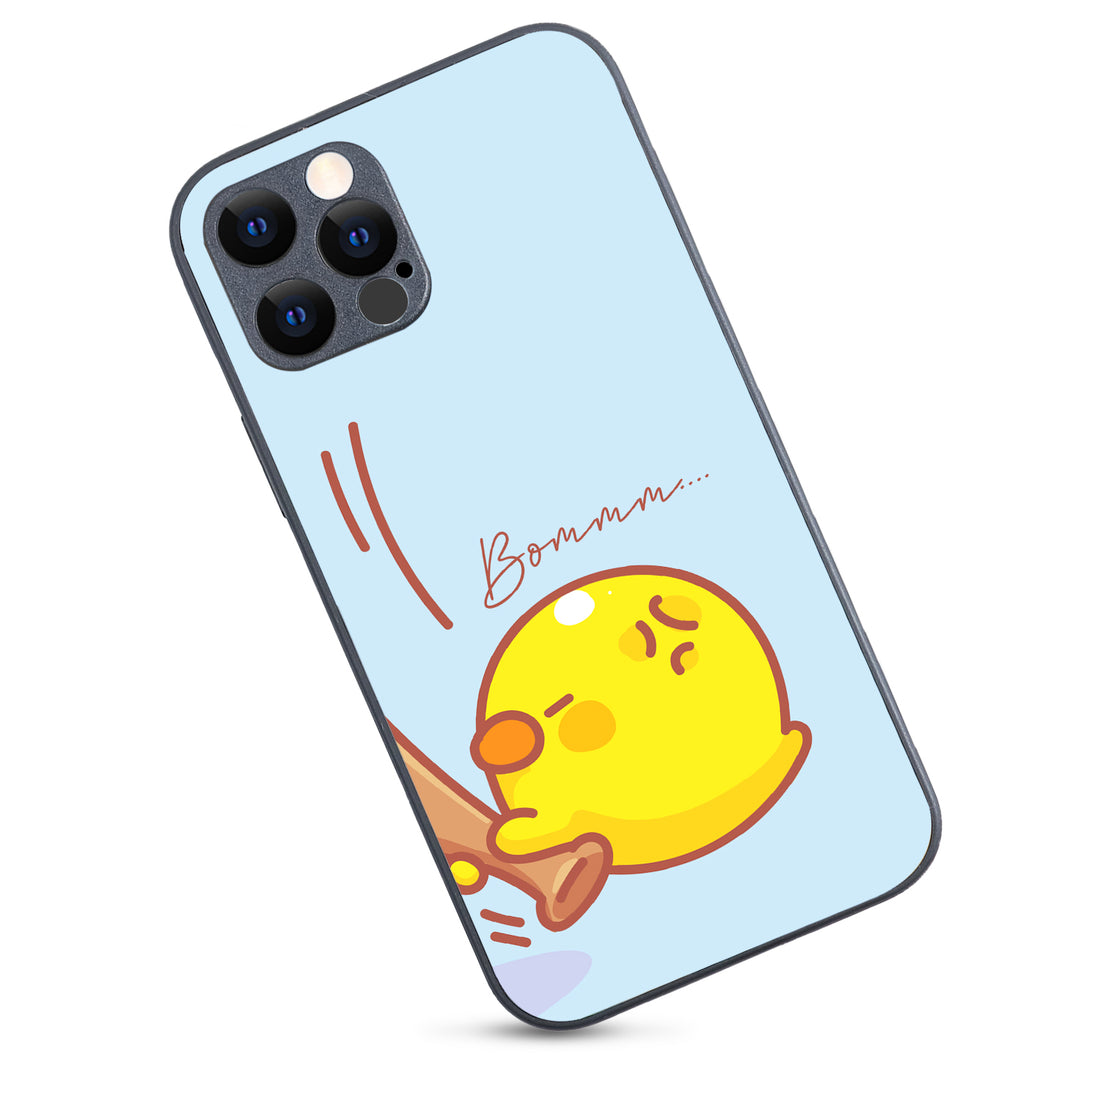 Bomm Cute Bff iPhone 12 Pro Case